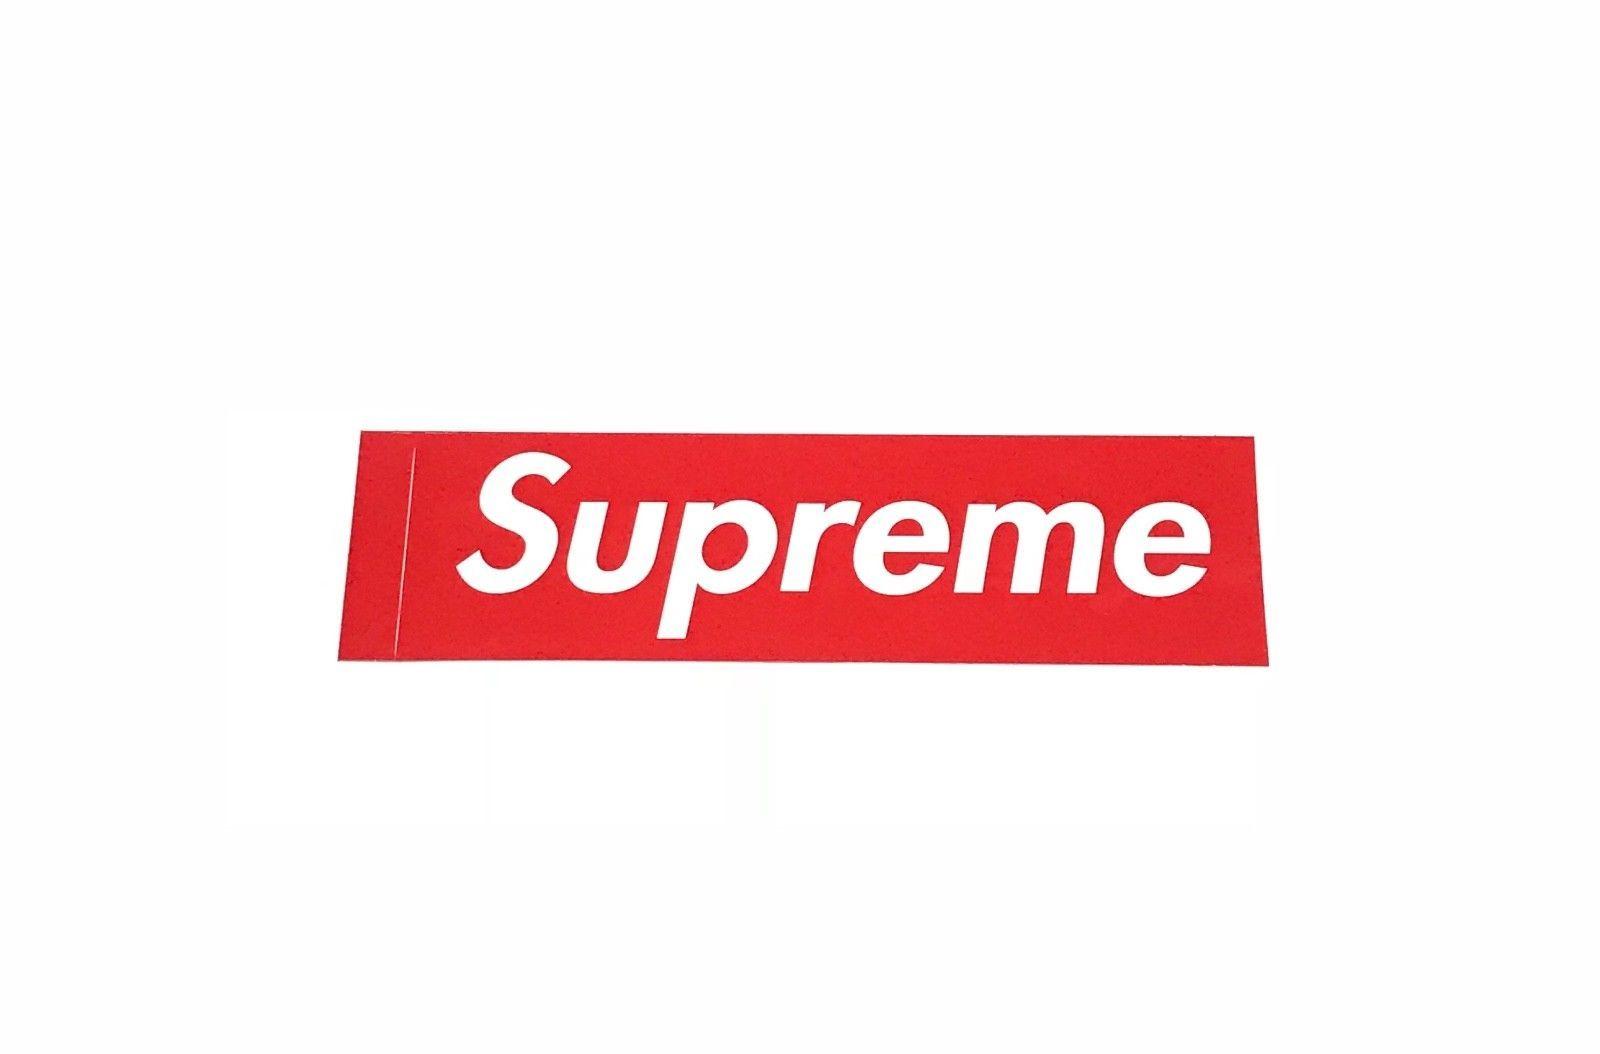 BAPE Supreme Box Logo - Details about Supreme Box Logo Sticker Classic Red 100% Authentic ...